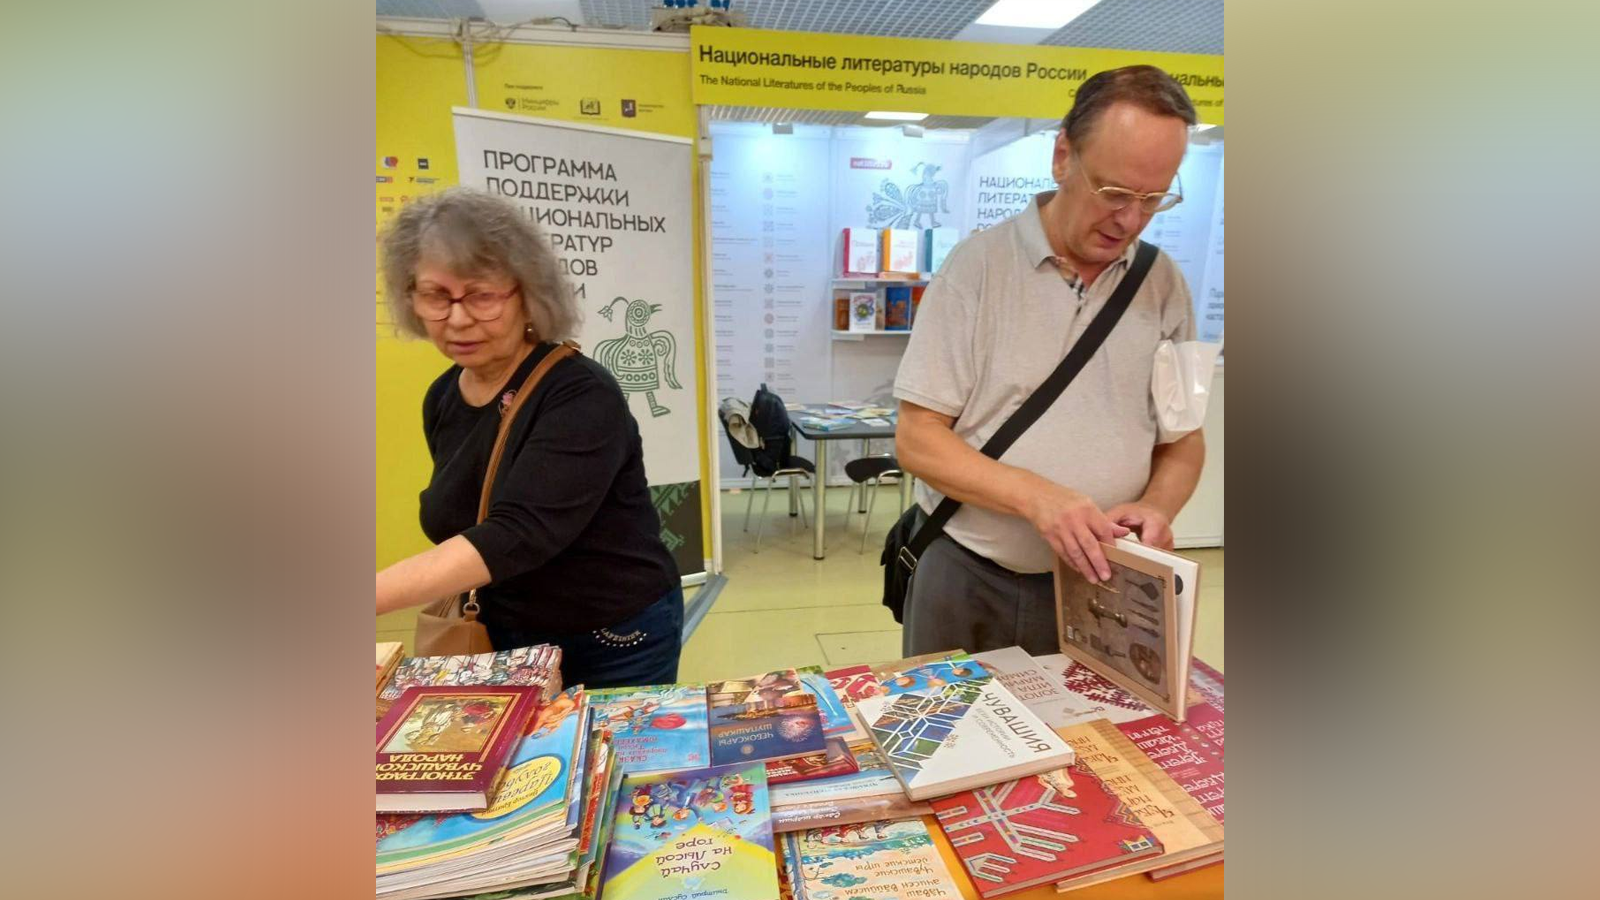 Chuvashia presented 160 titles of books at the Moscow Fair